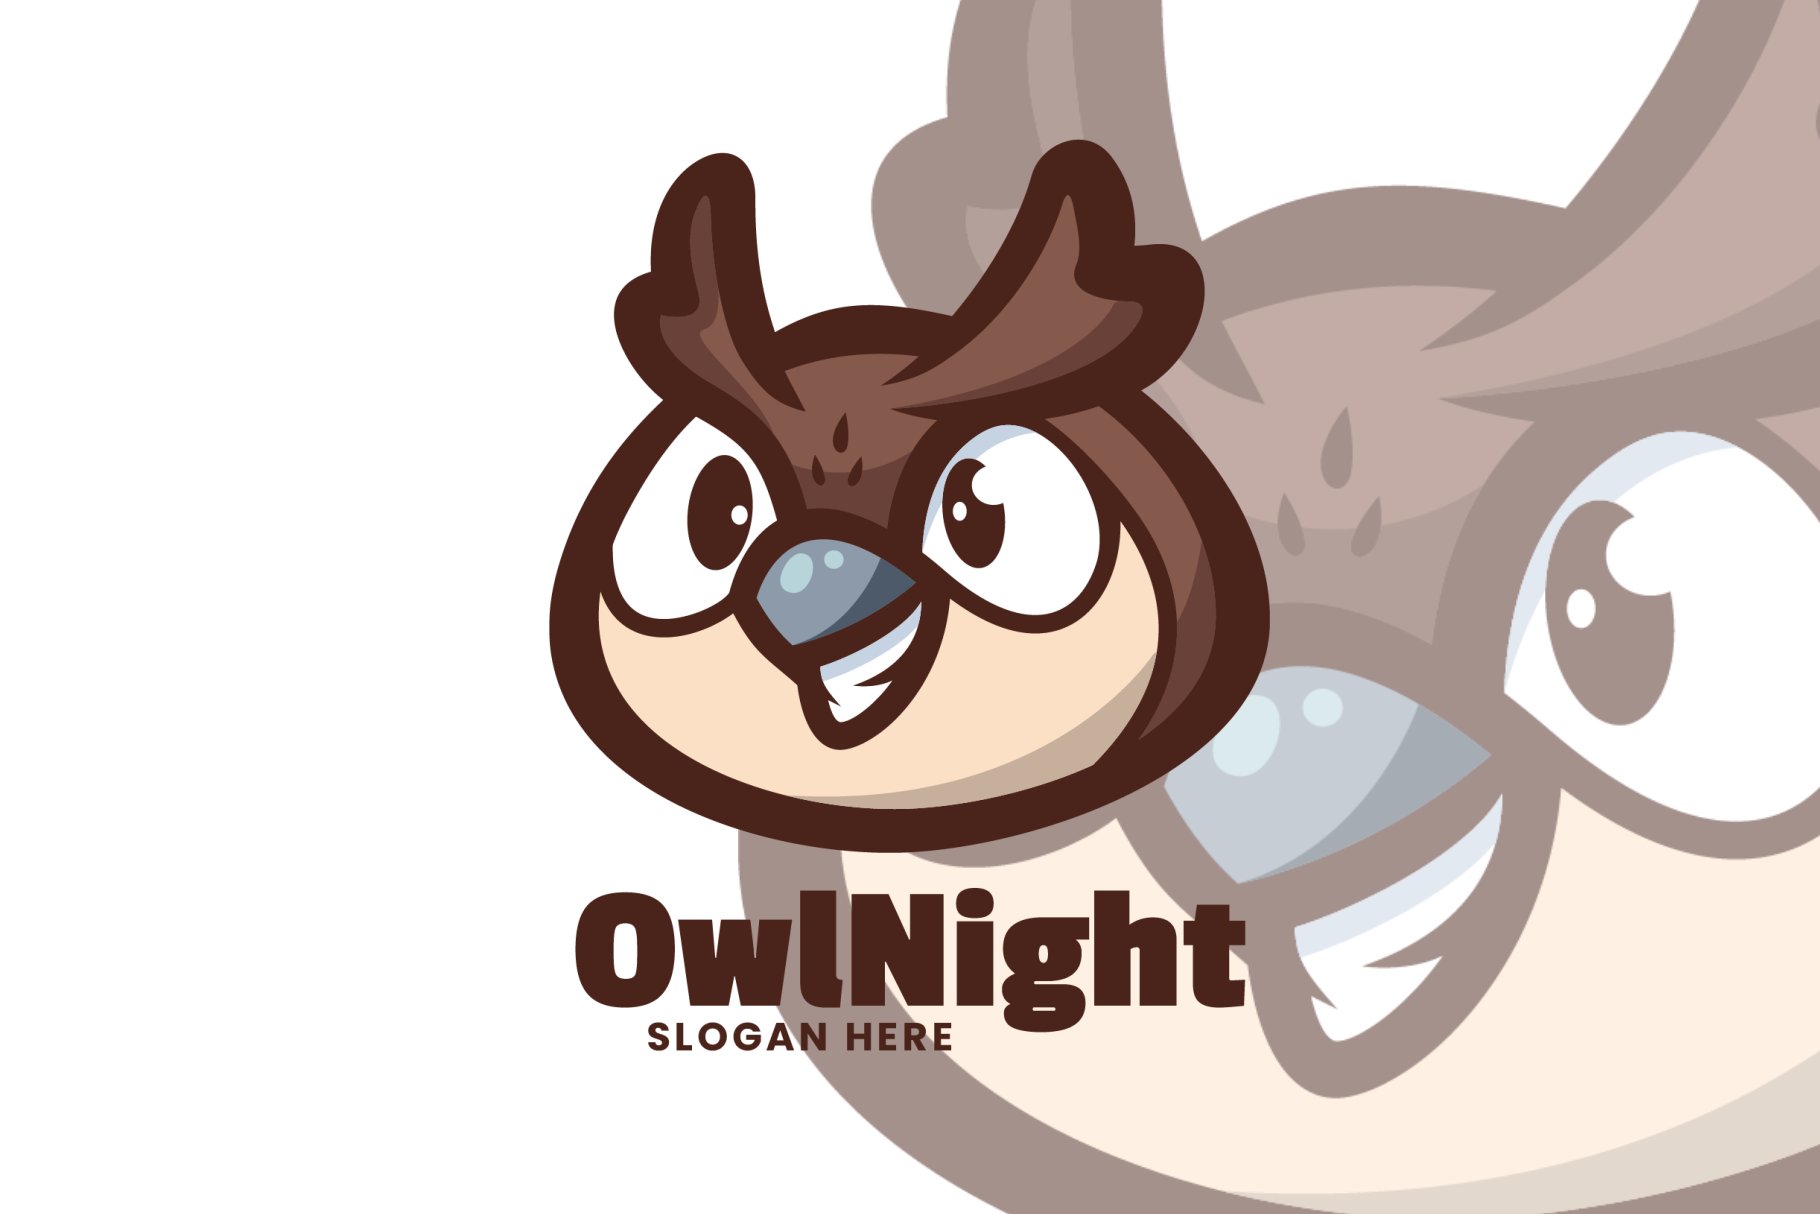 NightOwl Logo cover image.